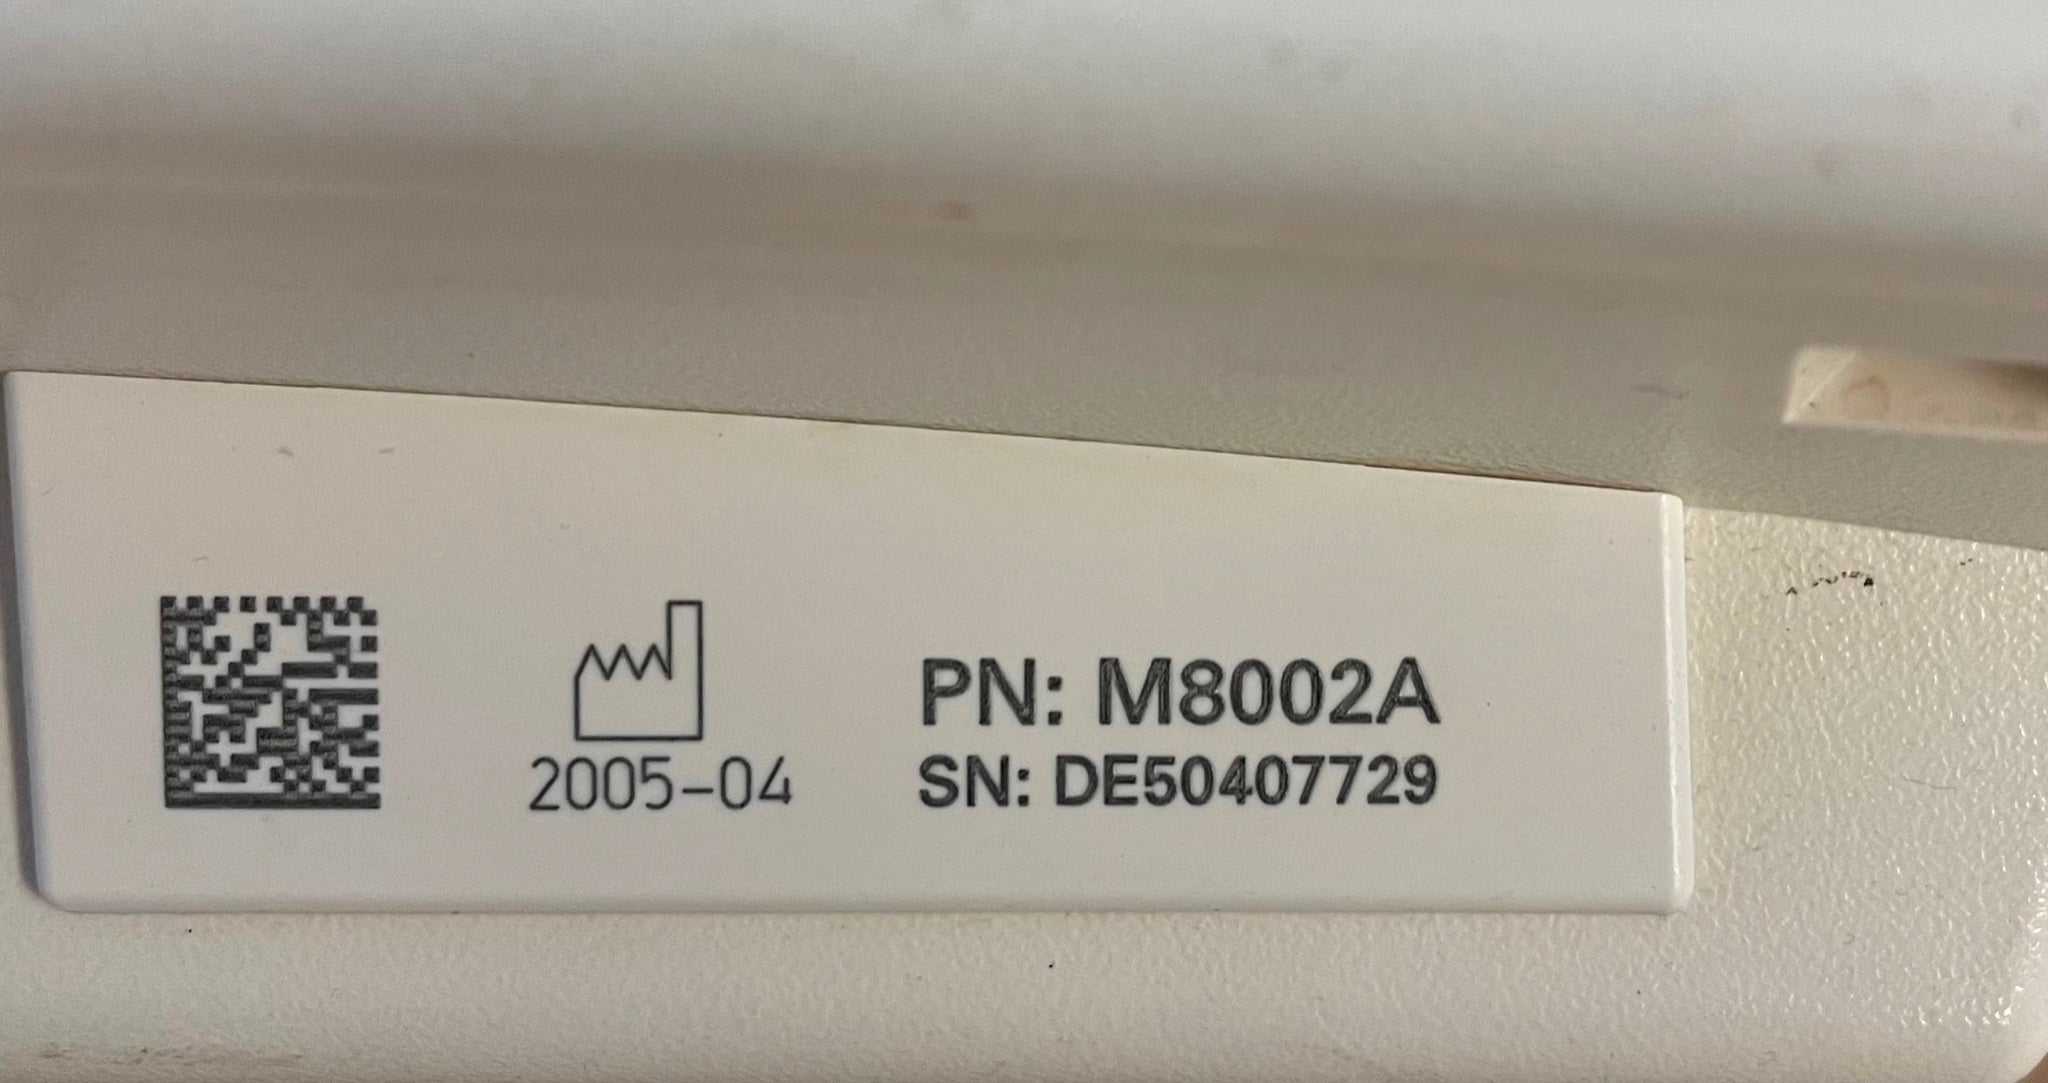 Philips IntelliVue MP30 Color Patient Monitor SN:DE50407729 REF:M8002A DIAGNOSTIC ULTRASOUND MACHINES FOR SALE